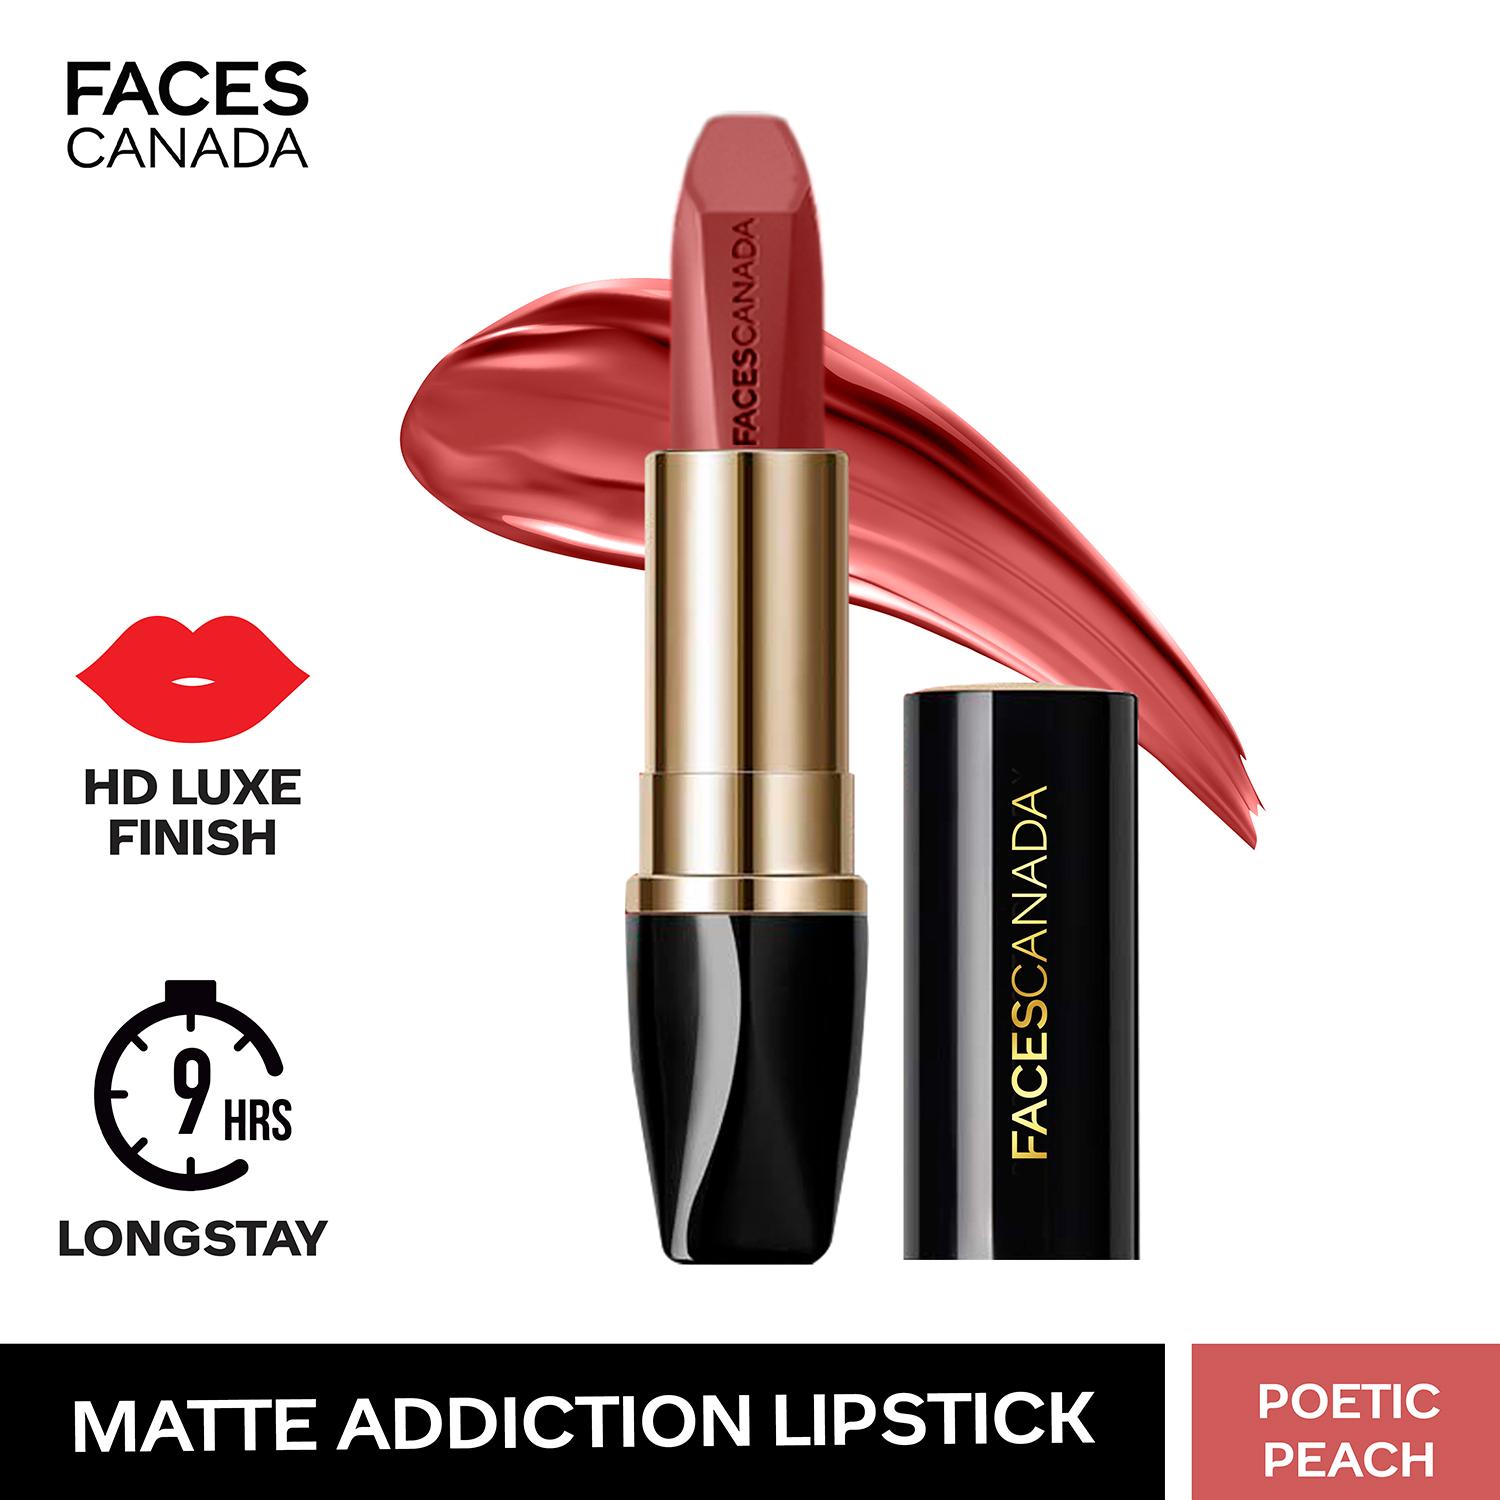 Faces Canada | Faces Canada Matte Addiction Lipstick, 9HR Stay, HD Finish, Intense Color - Poetic Peach (3.7 g)